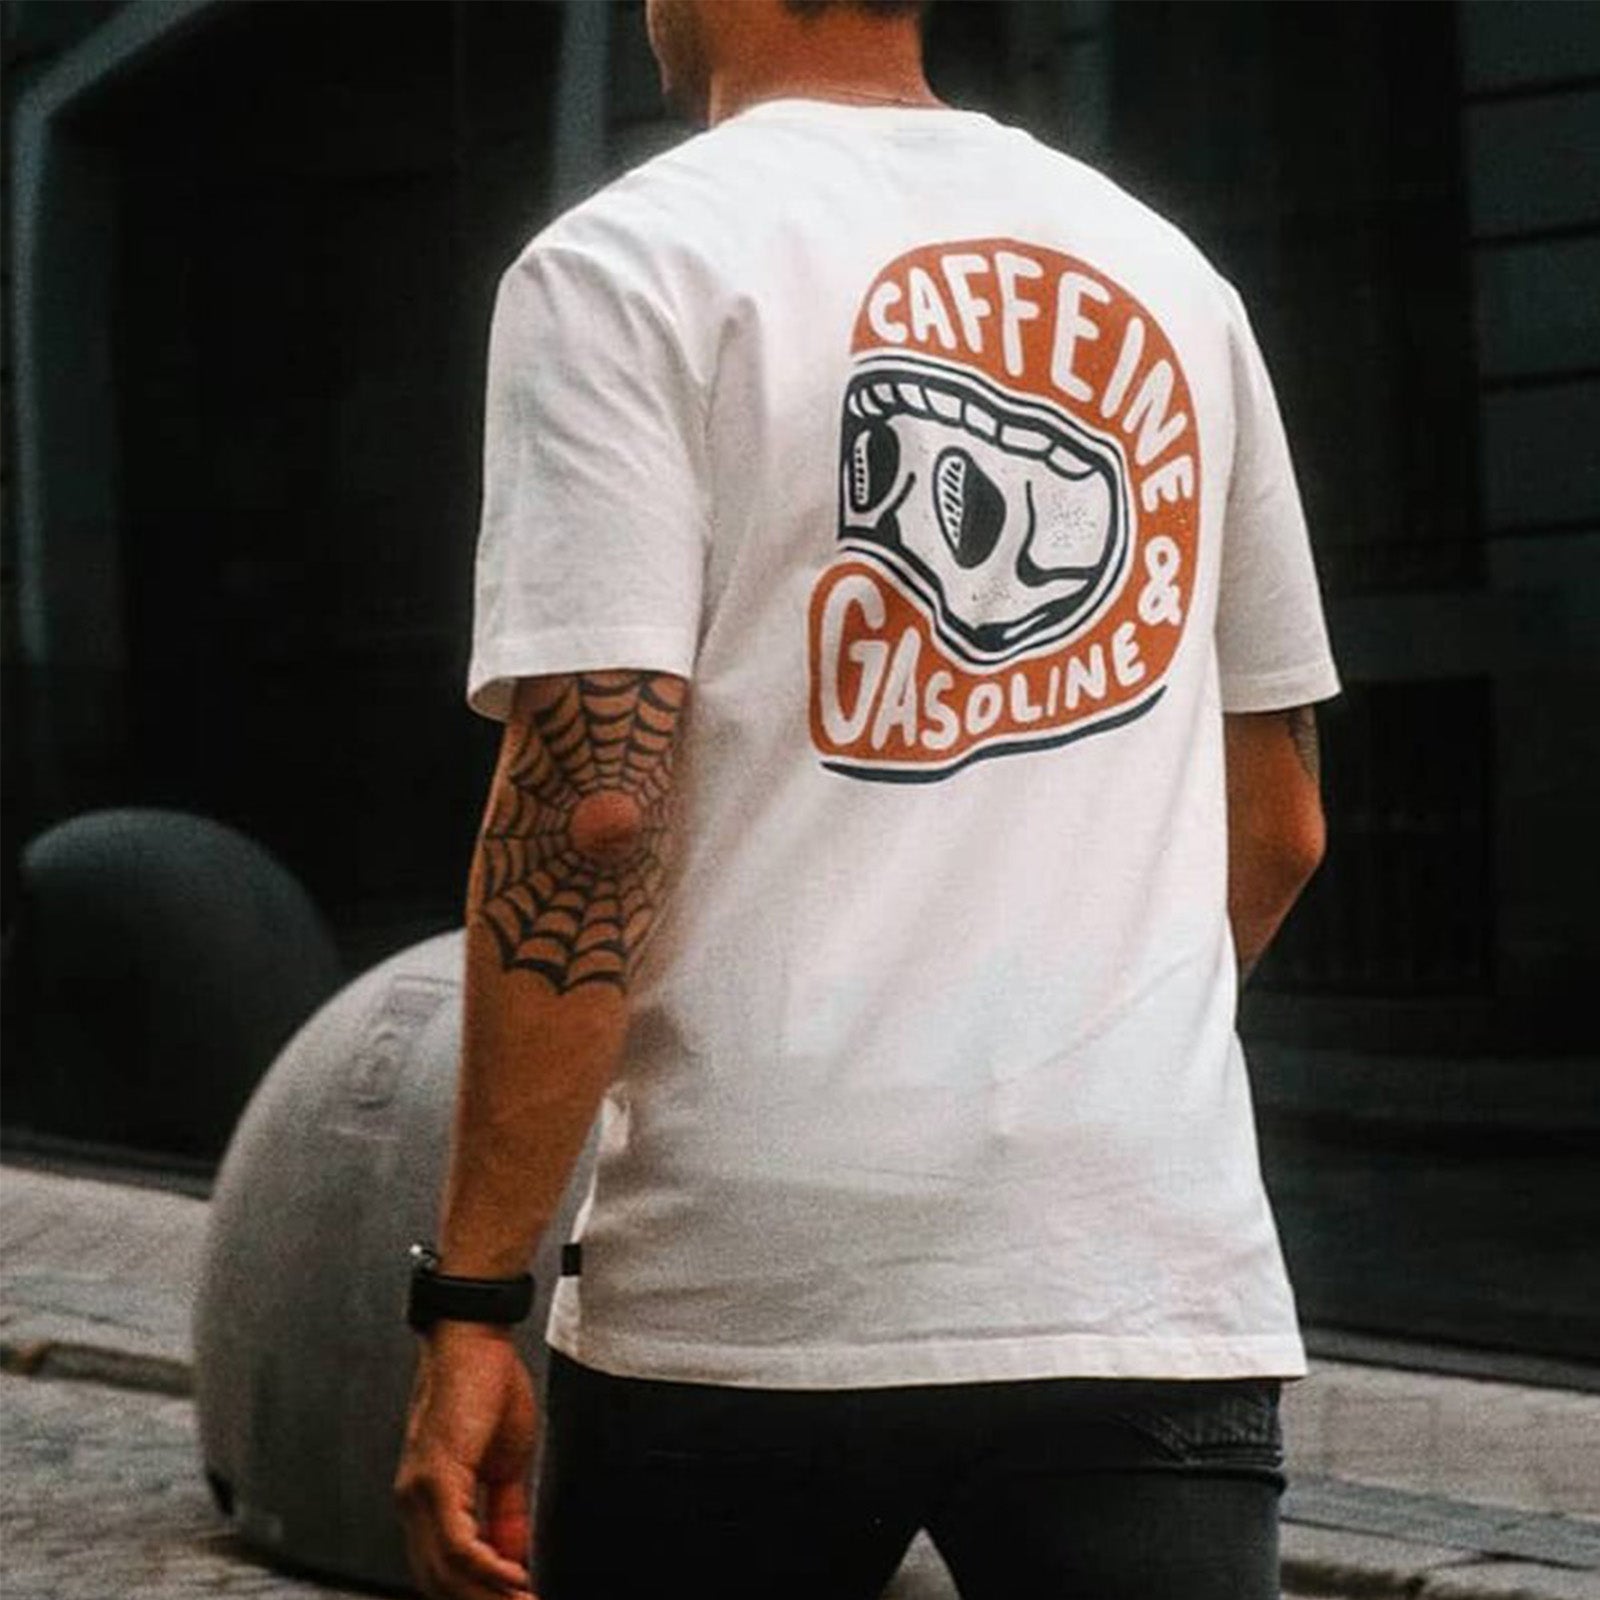 Uprandy Caffeine Gasoline Skull Short Sleeve T-Shirt - chicyea